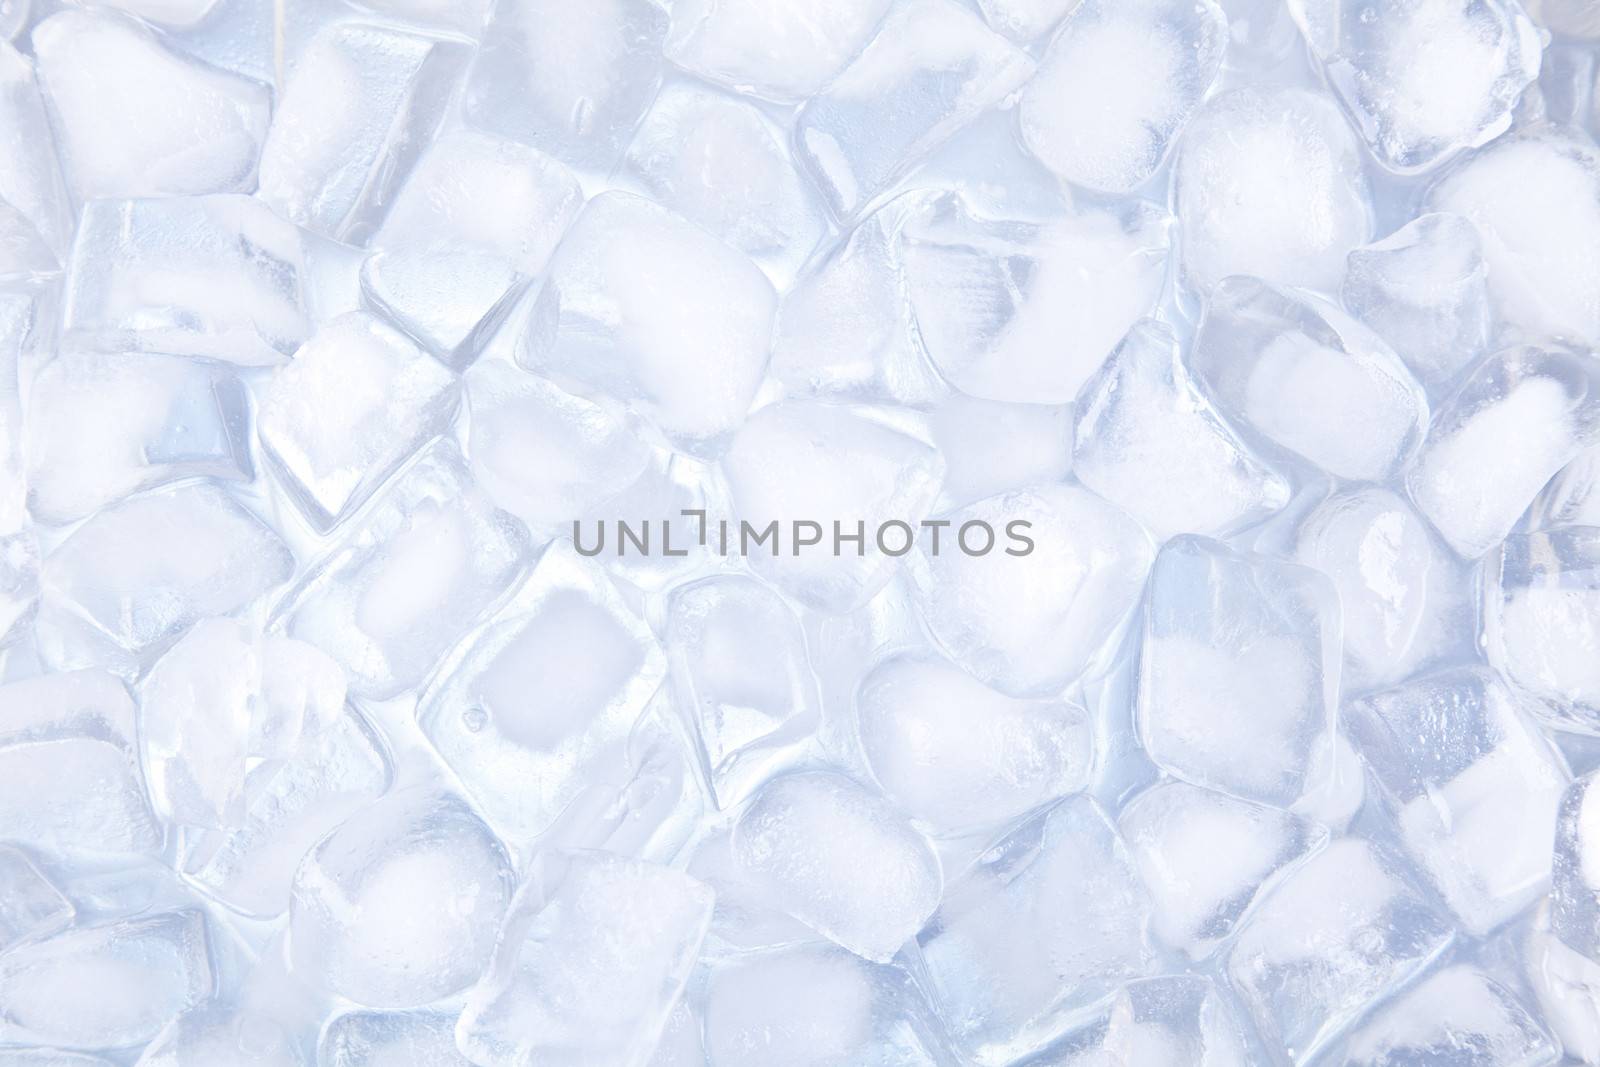 Ice cubes backgound by antonprado